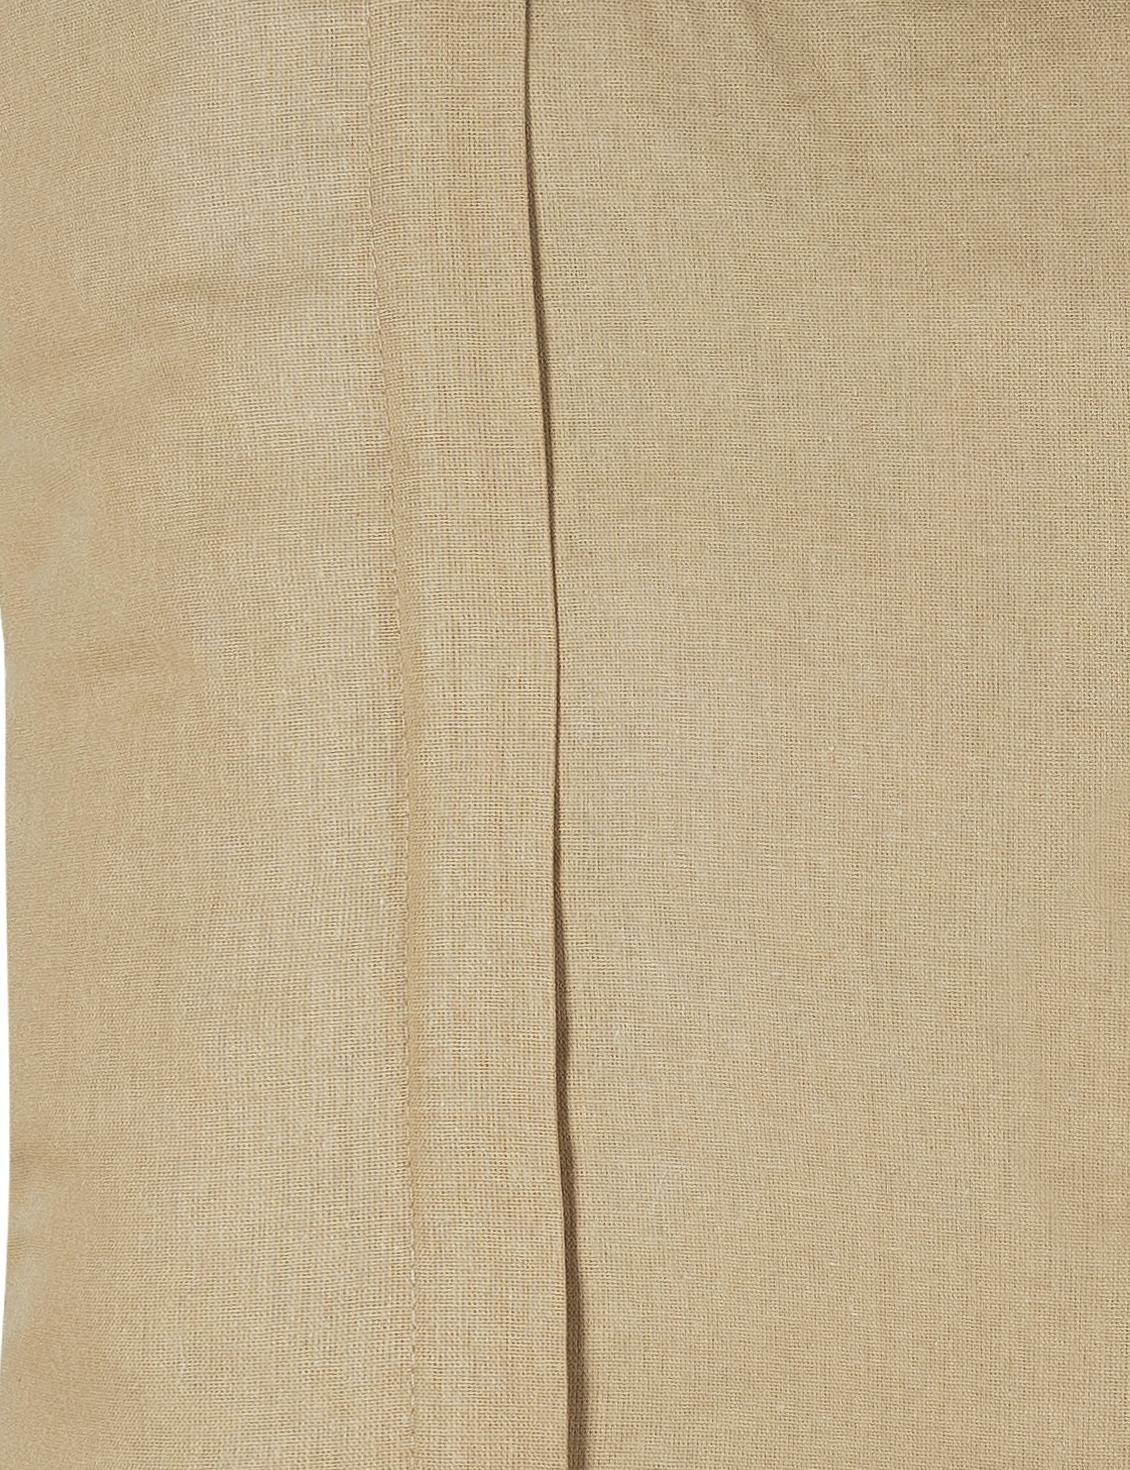 Handbesticktes Kissenbezug aus 100 % Seide, farbenfrohes Suzani-Spitze-Kissen. 19